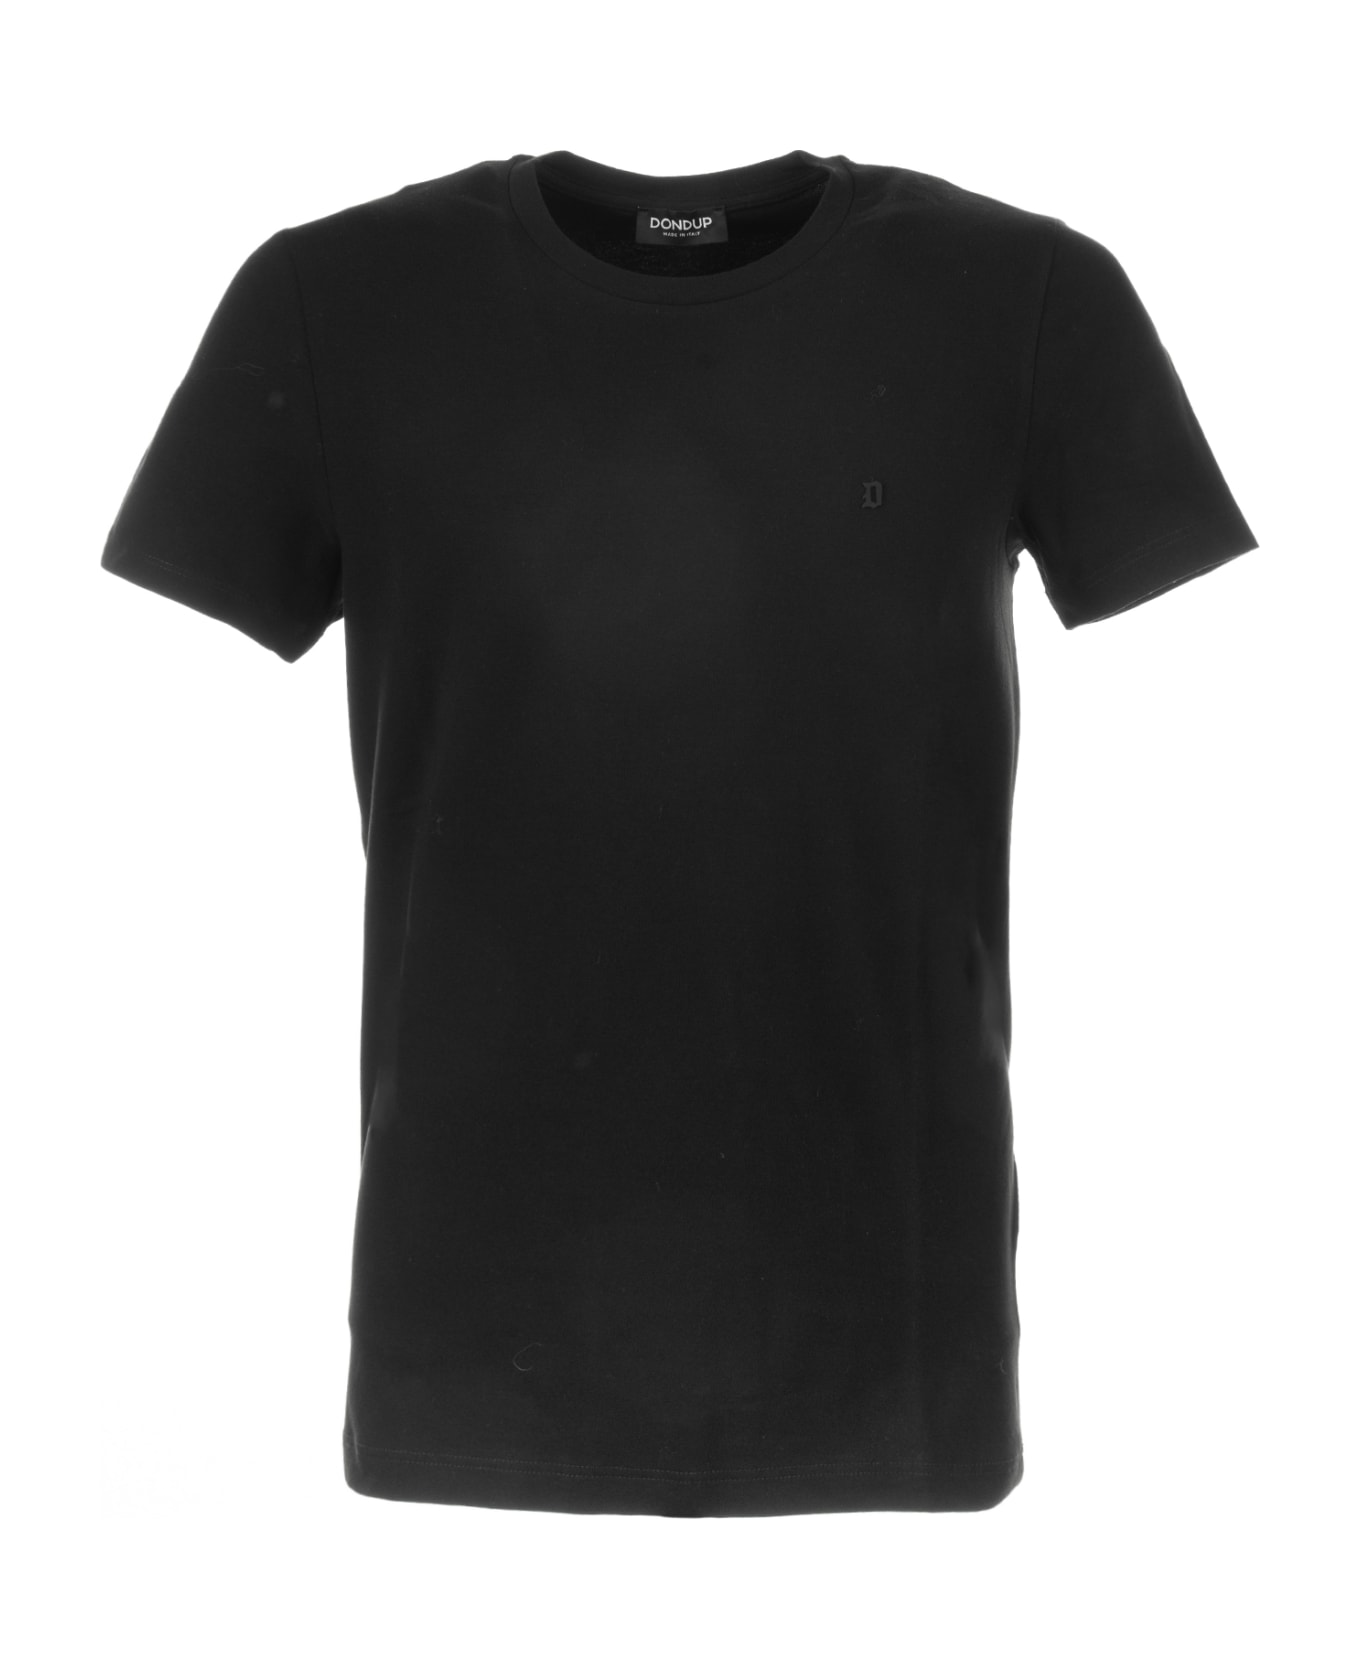 Dondup Black Stretch Jersey T-shirt - Black